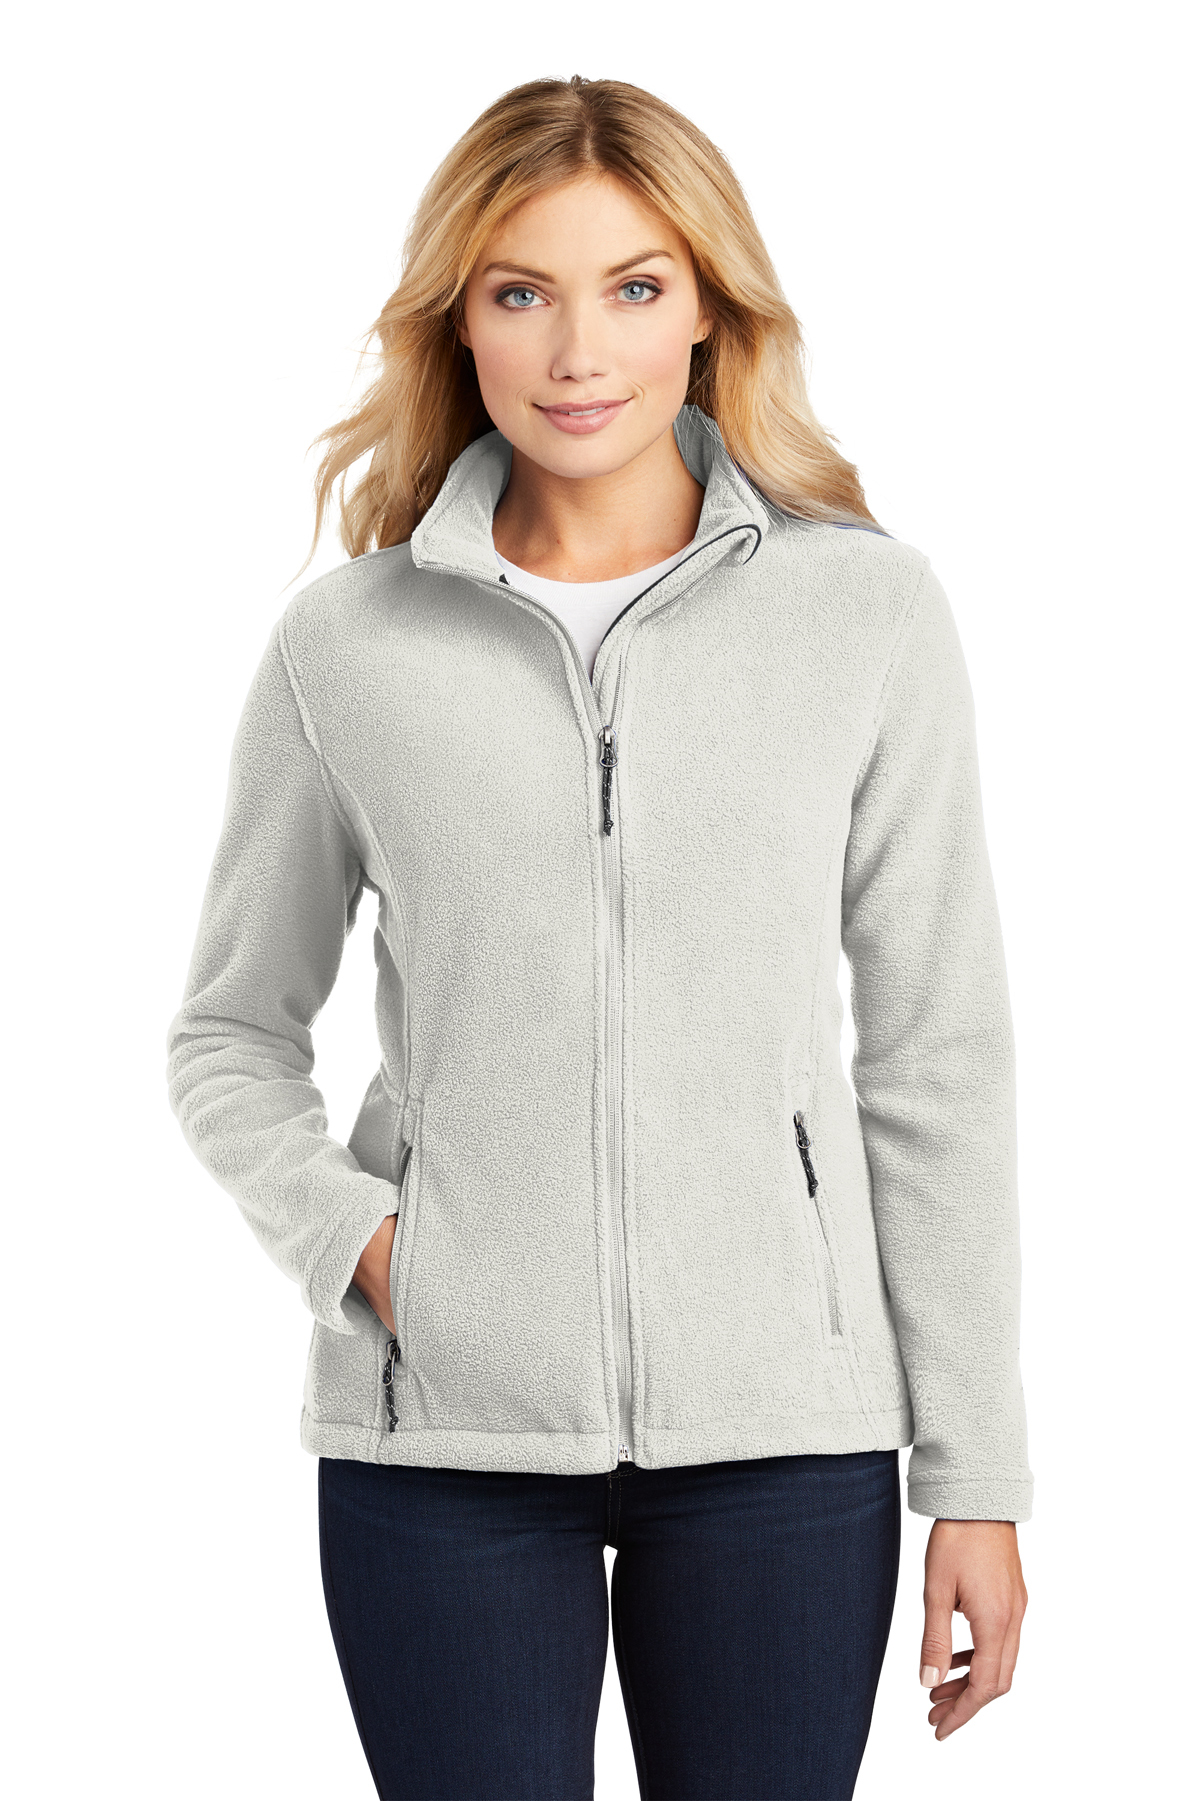 Port Authority® Ladies Value Fleece Vest – L219